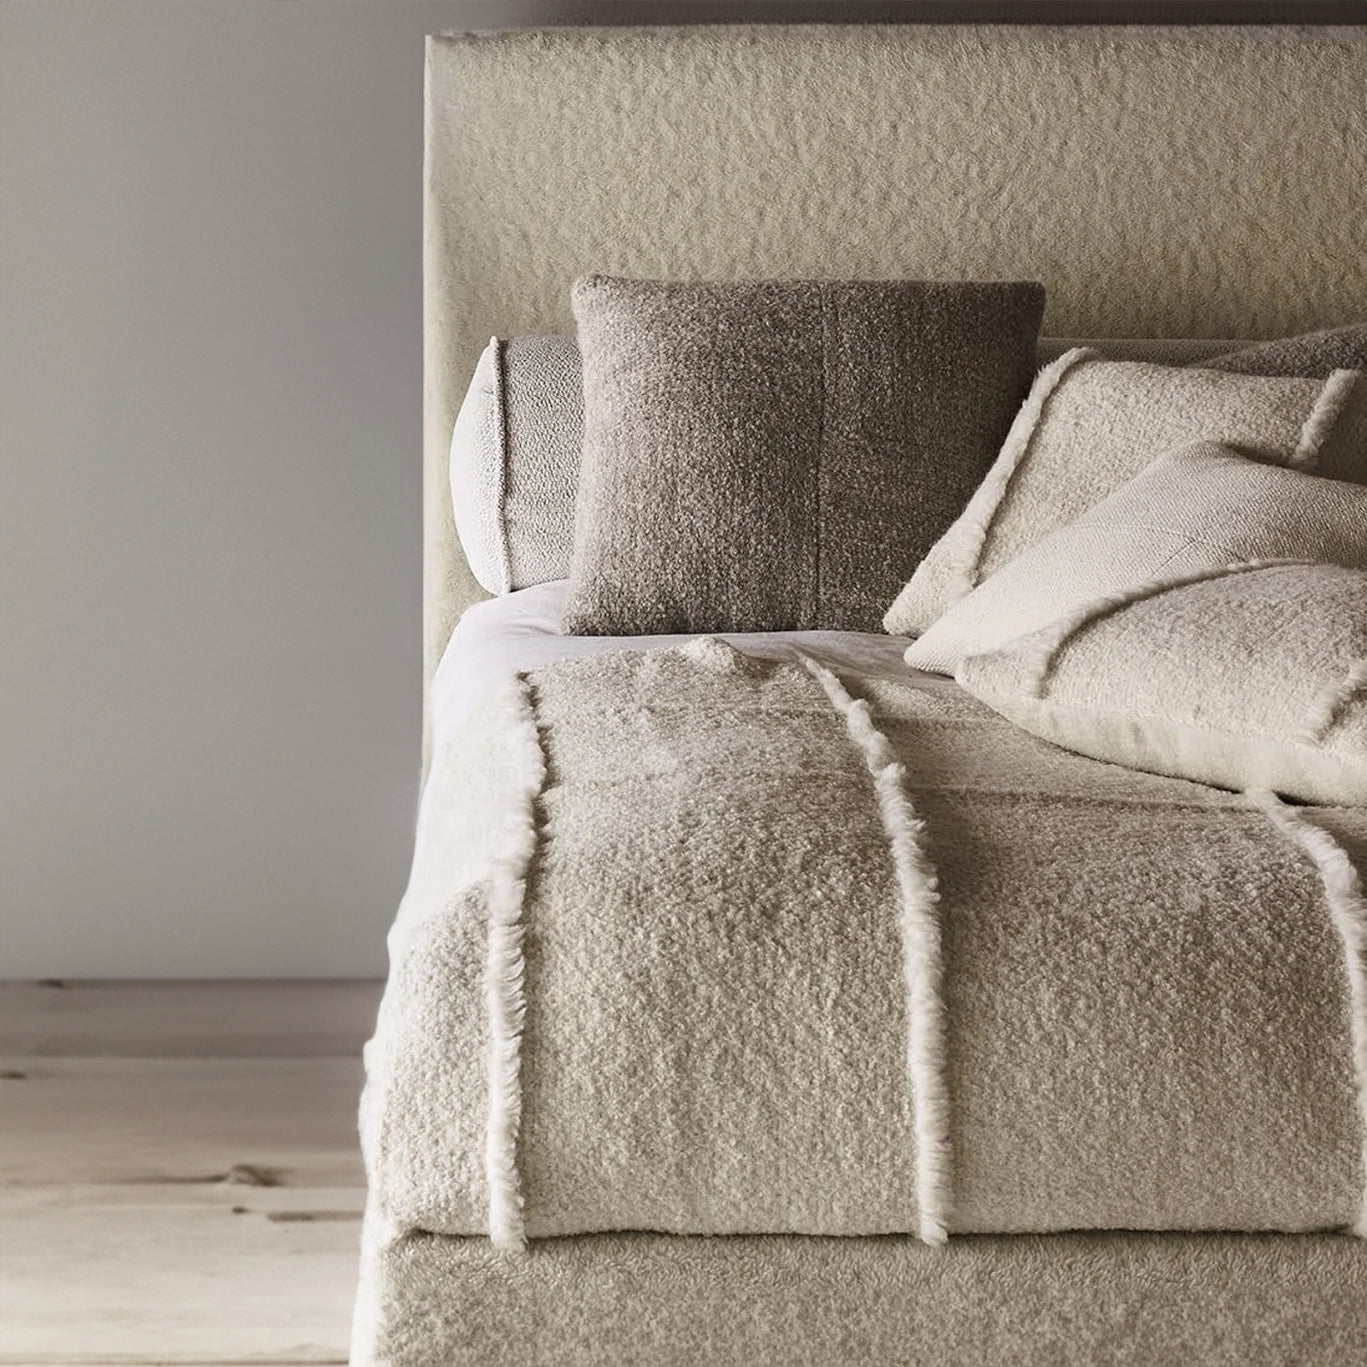 The Bespoke Cora Boucle Upholstered Bed Frame-Cream Fully Customisable with Storage Options- Cream Chloe Boucle Range